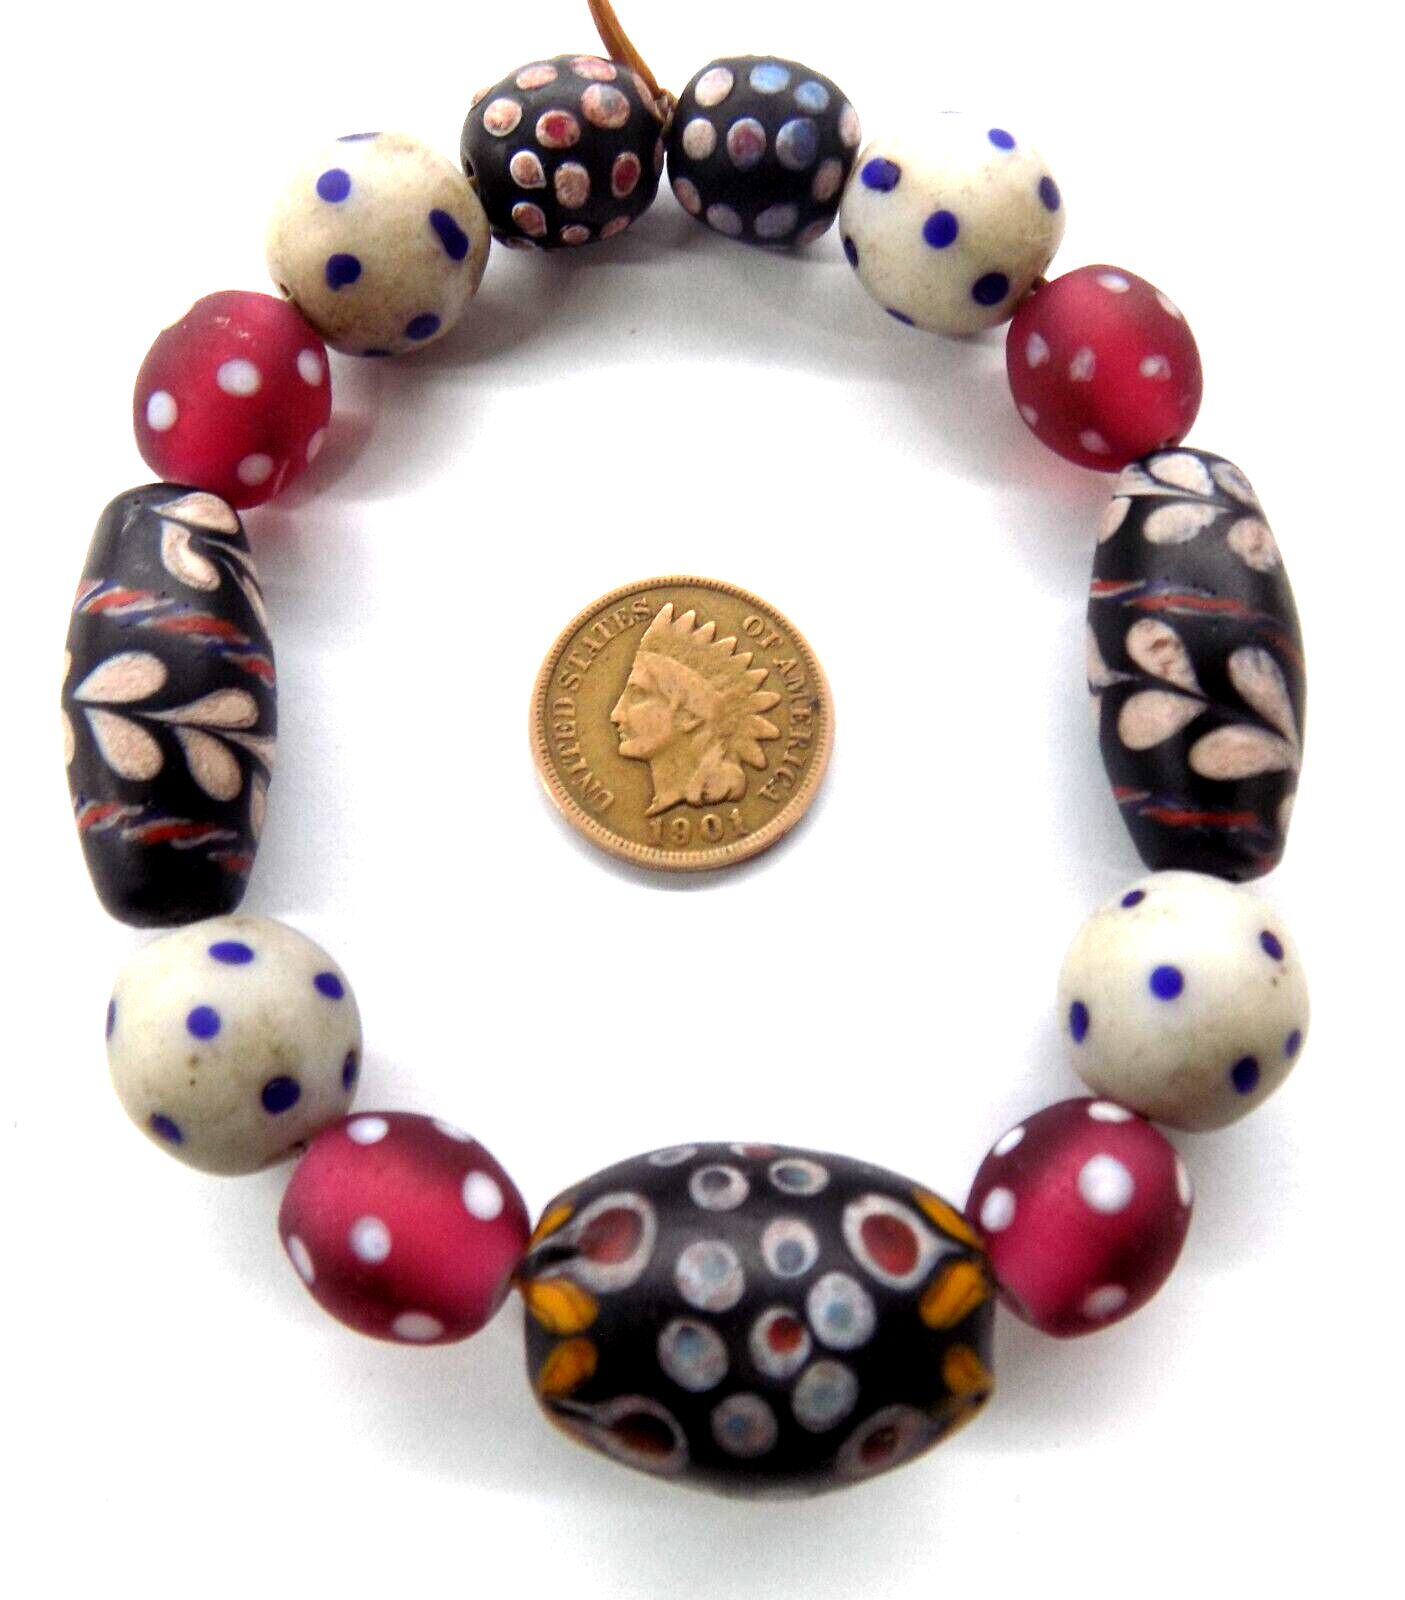 Lewis & Clark Strand Ambassador Eye White Center Eye African Trade Beads Bin 66